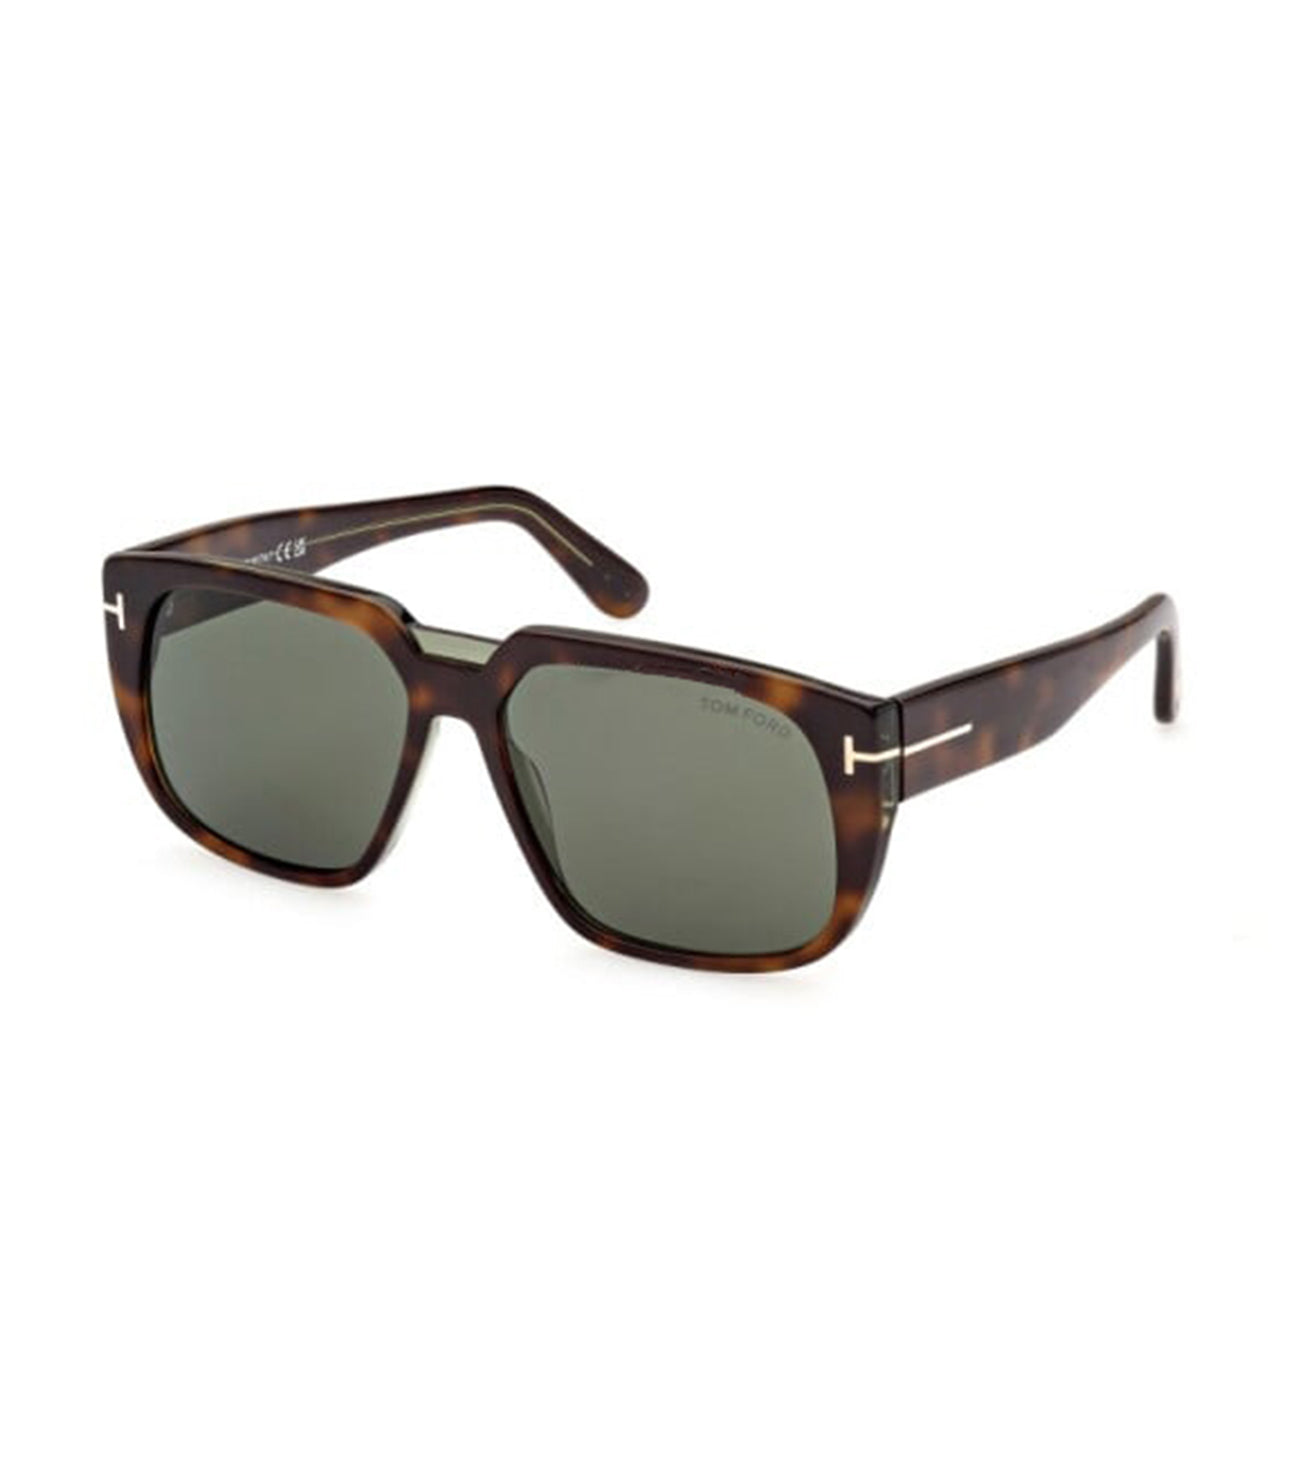 Tom Ford Oliver Men's Green Square Sunglasses